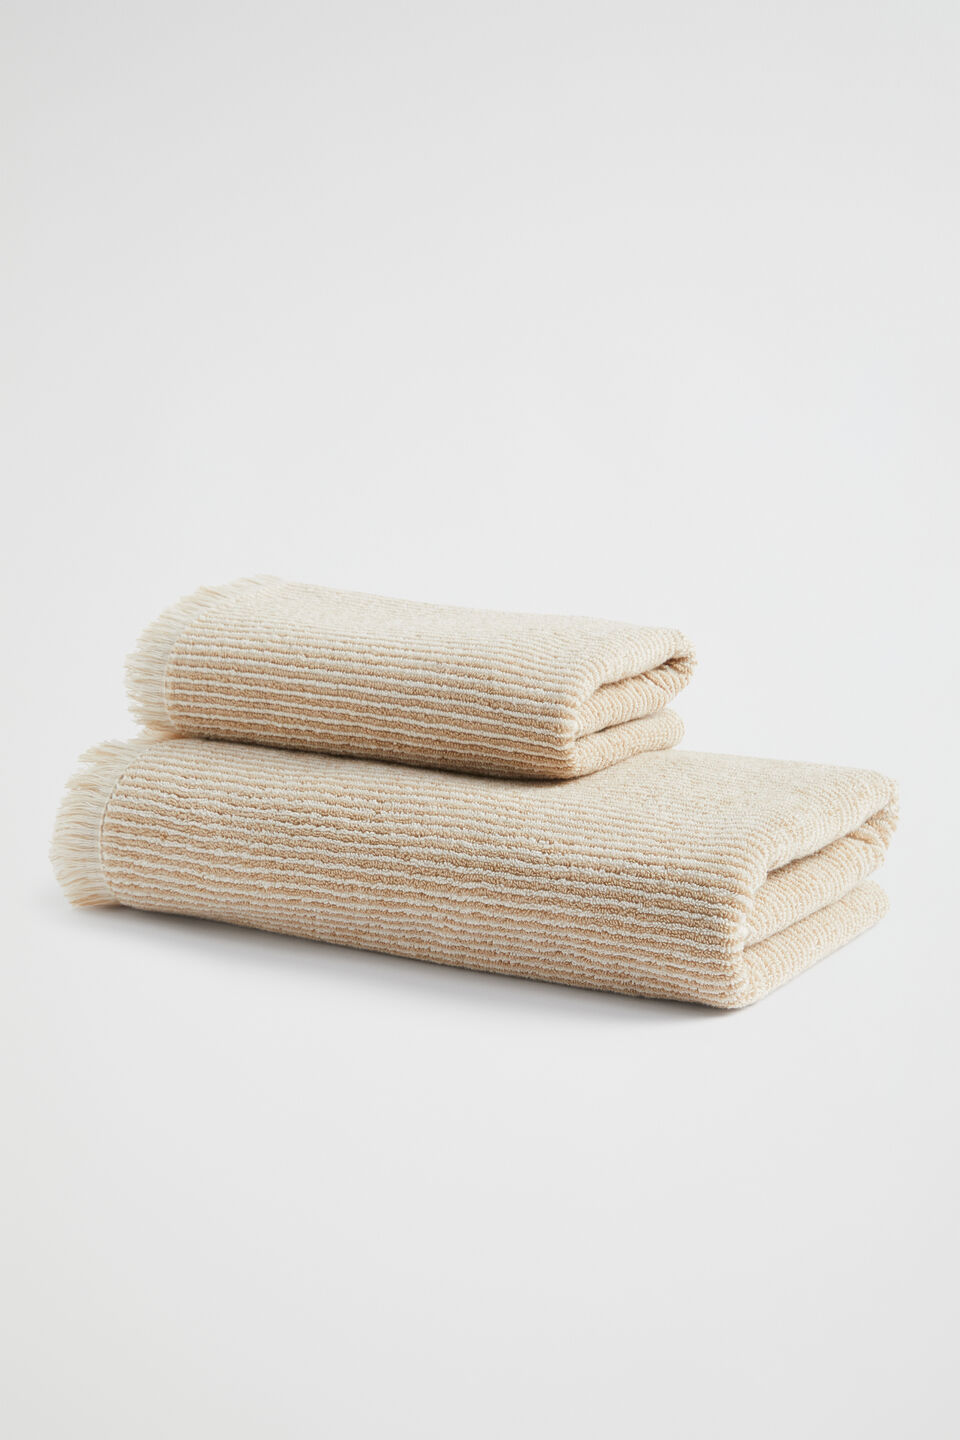 Stripe Textured Hand Towel  Stone